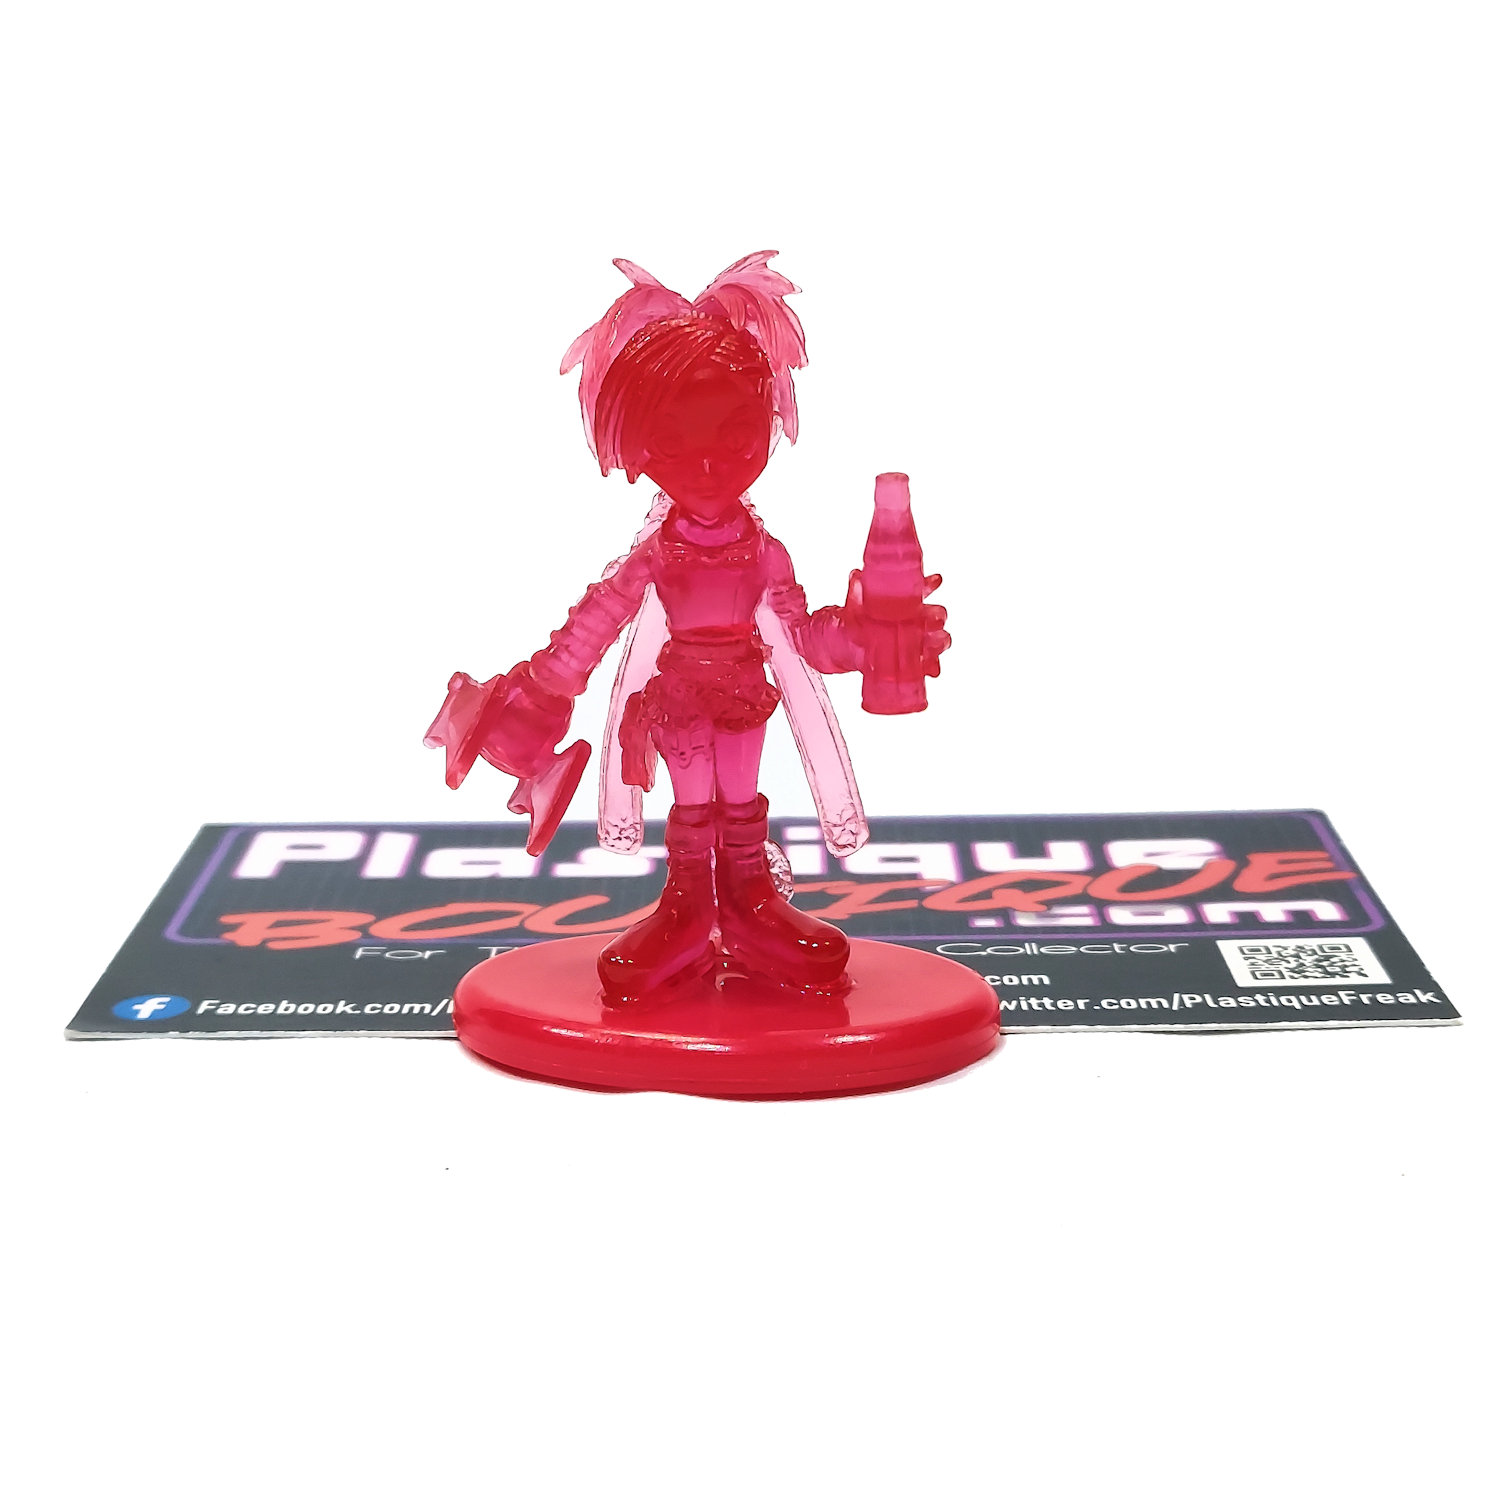 Coca-Cola Final Fantasy X Volume 3: Rikku Mini Figure (Red Crystal Version)